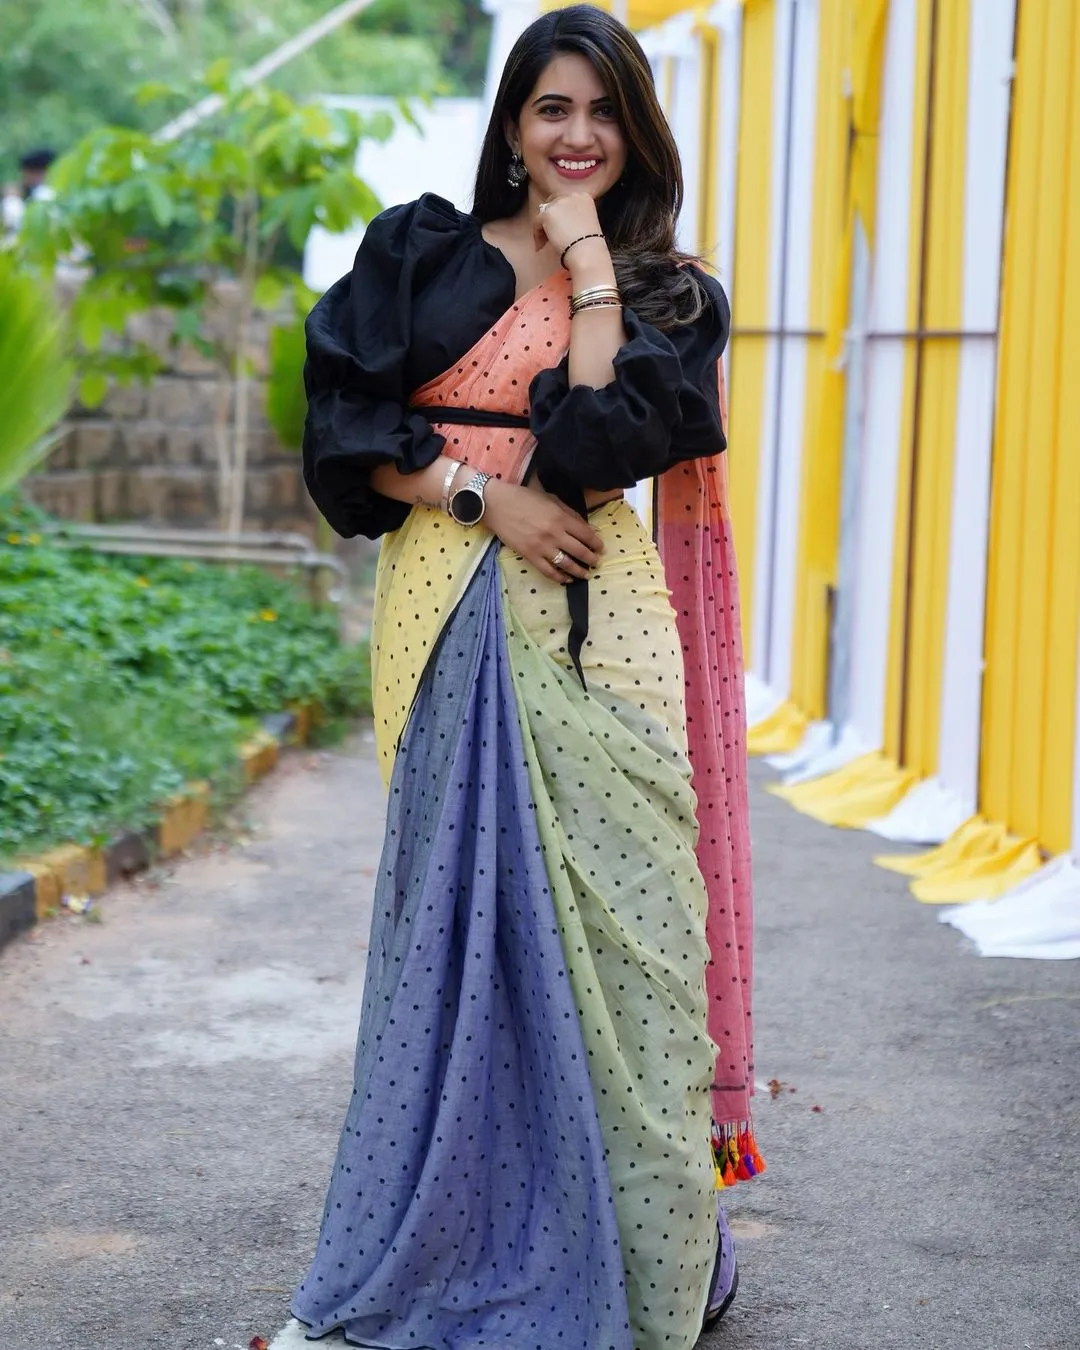 TELUGU TV ACTRESS SRAVANTHI CHOKARAPU PHOTOSHOOT IN YELLOW SAREE 2